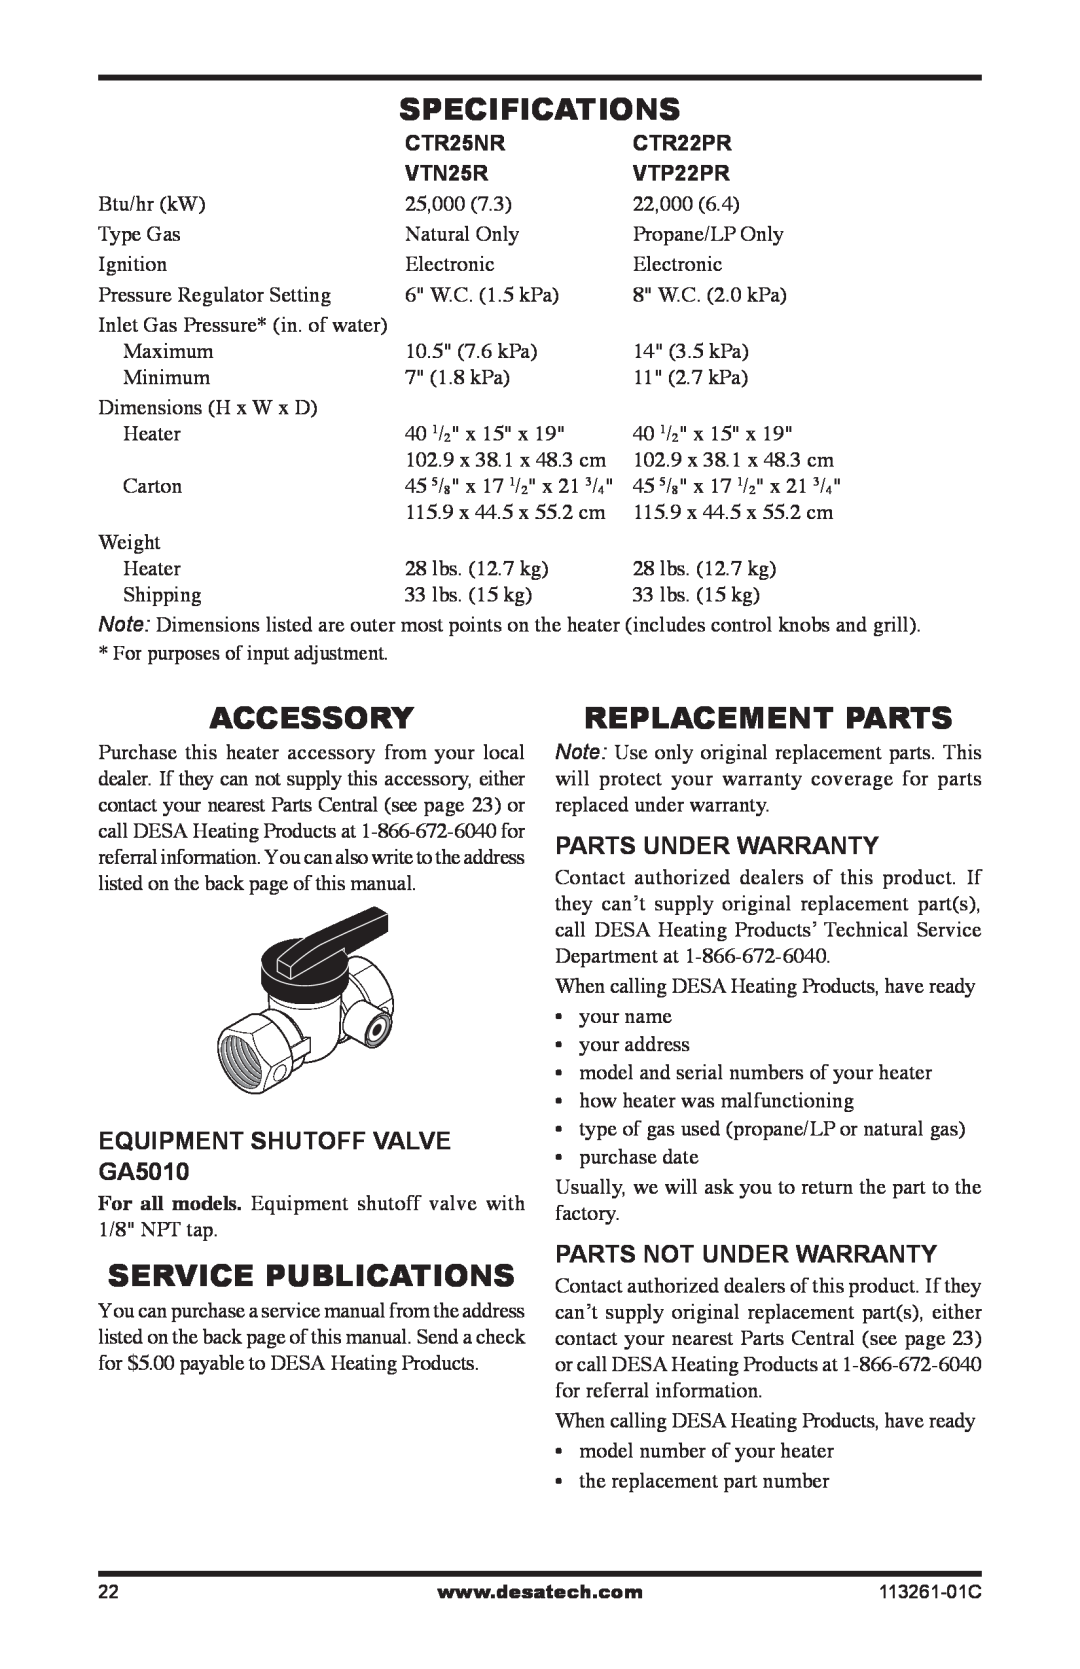 Desa VTP22R, VTN25R Specifications, Accessory, Service Publications, Replacement Parts, EQUIPMENT SHUTOFF VALVE GA5010 